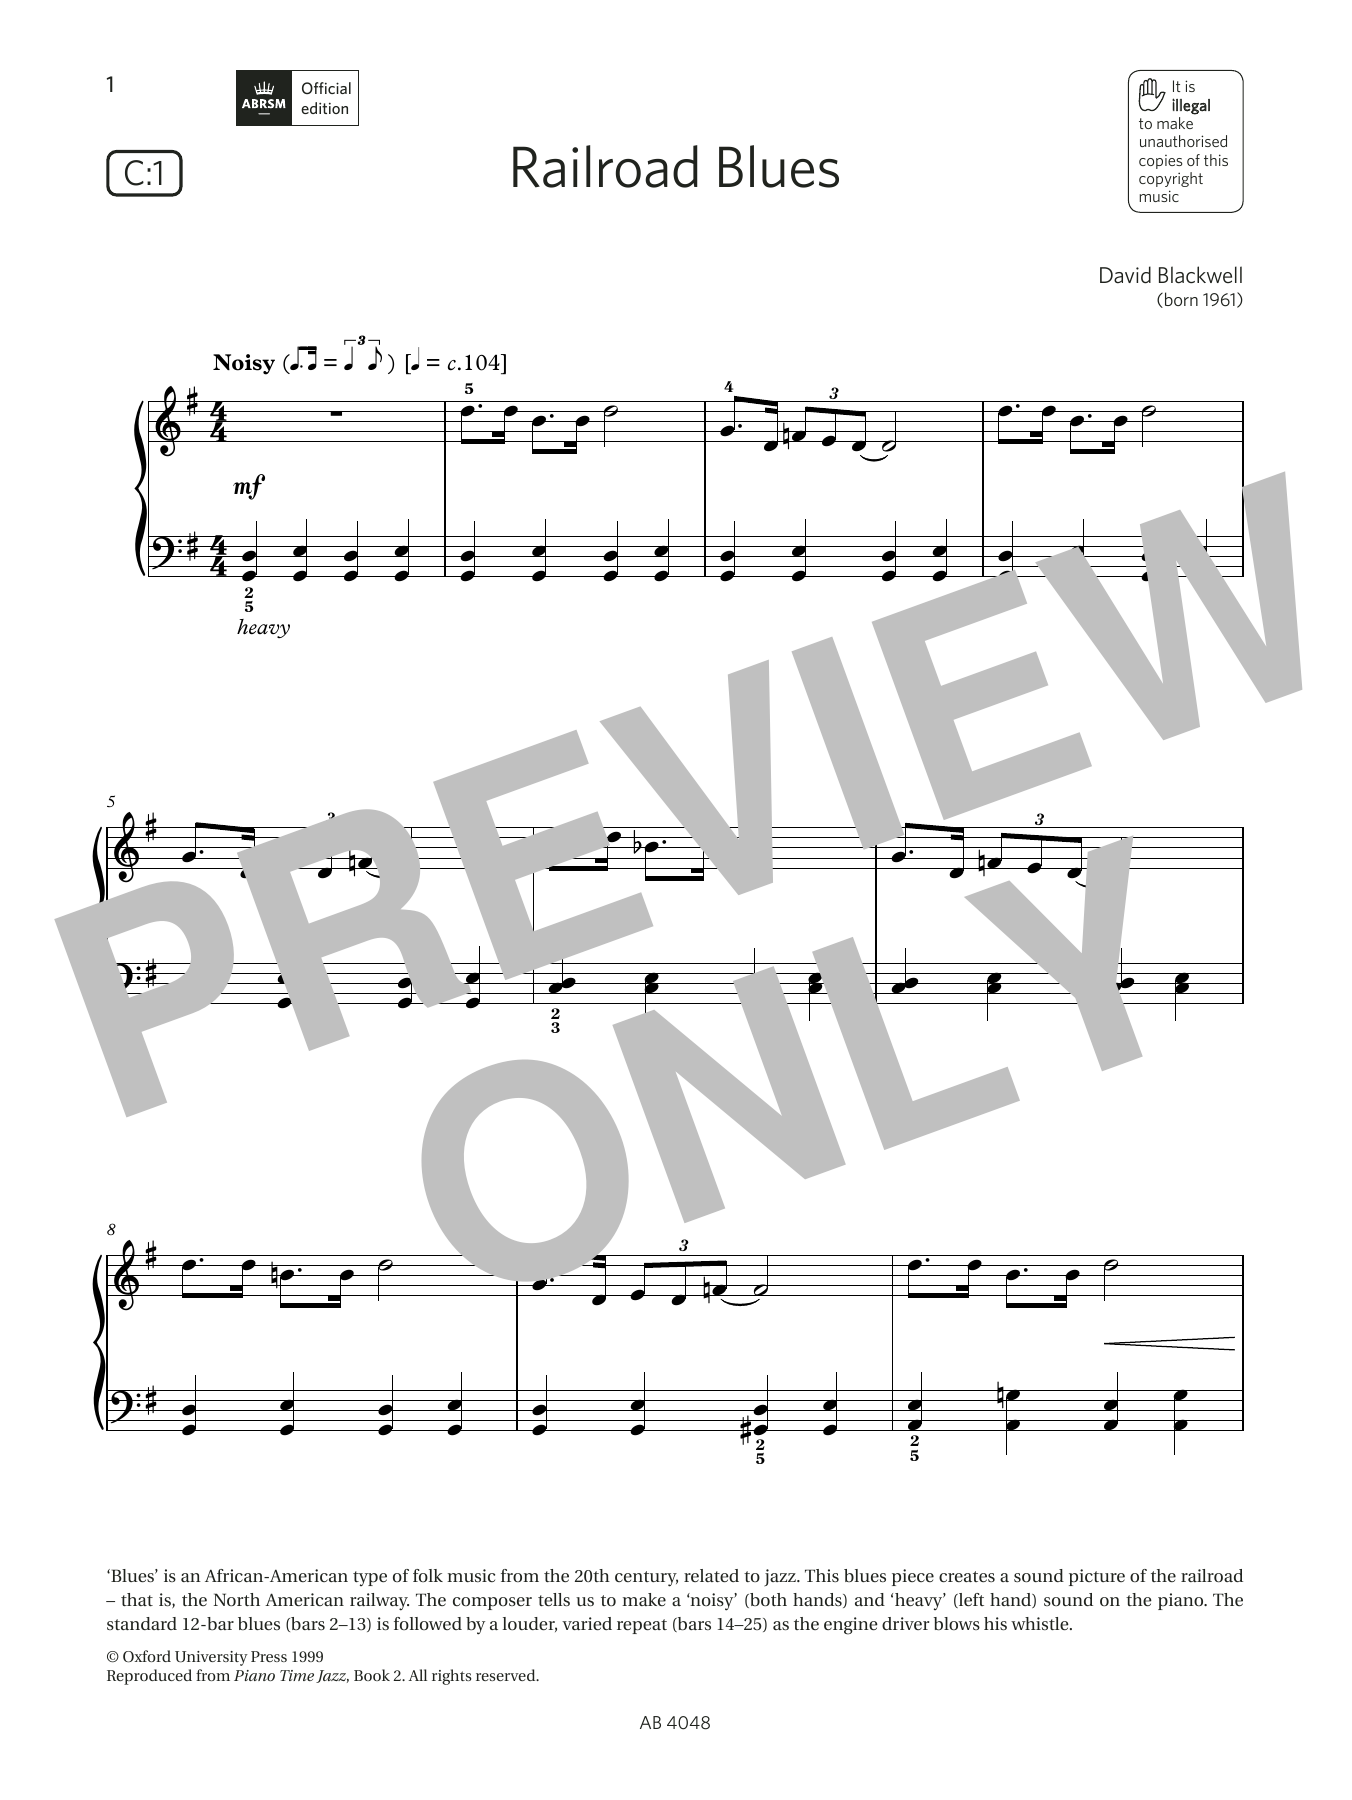 David Blackwell "Railroad Blues (Grade 2, list C1, from the ABRSM Piano